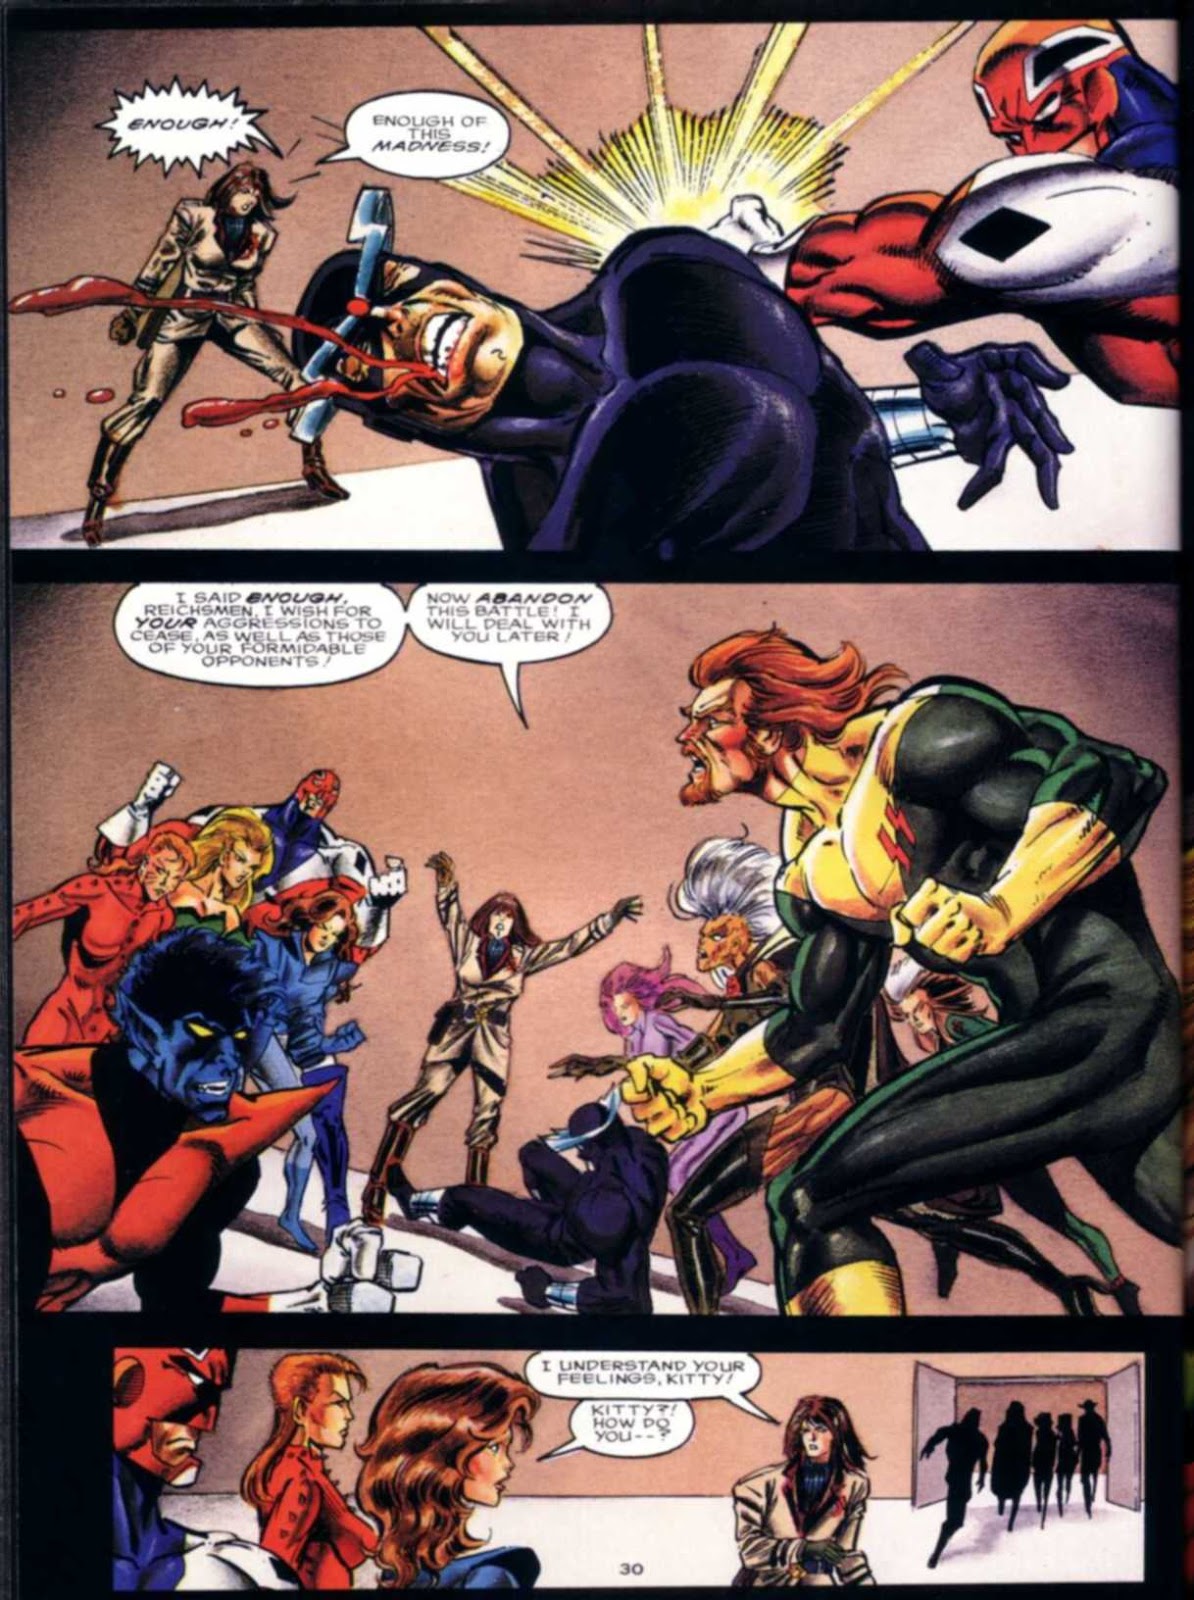 Marvel Graphic Novel issue 66 - Excalibur - Weird War III - Page 29